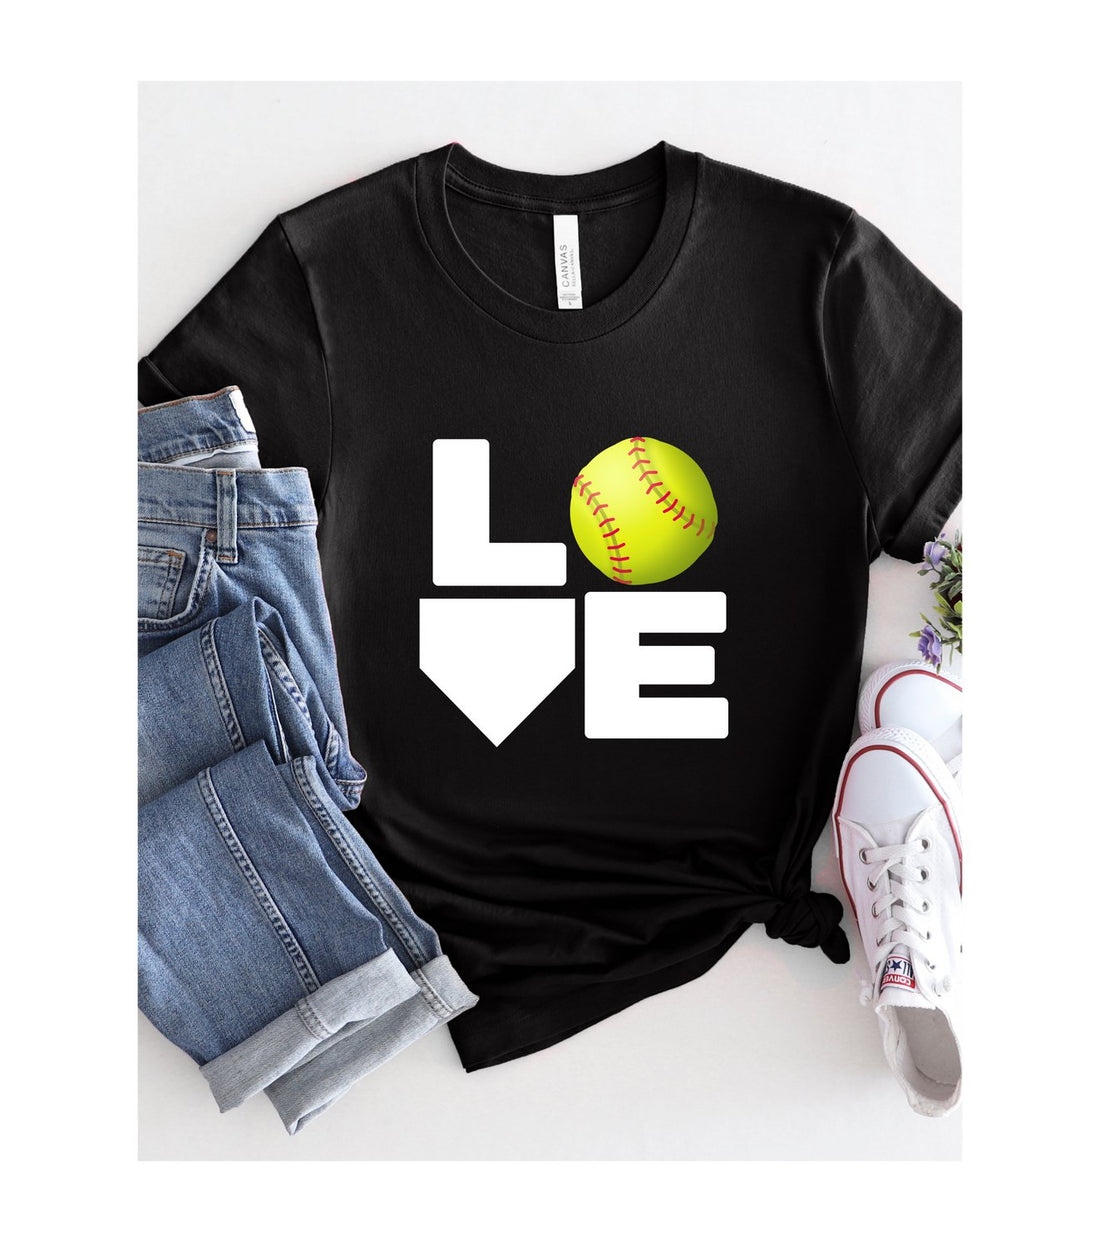 LOVE Softball - T-Shirt - Positively Sassy - LOVE Softball